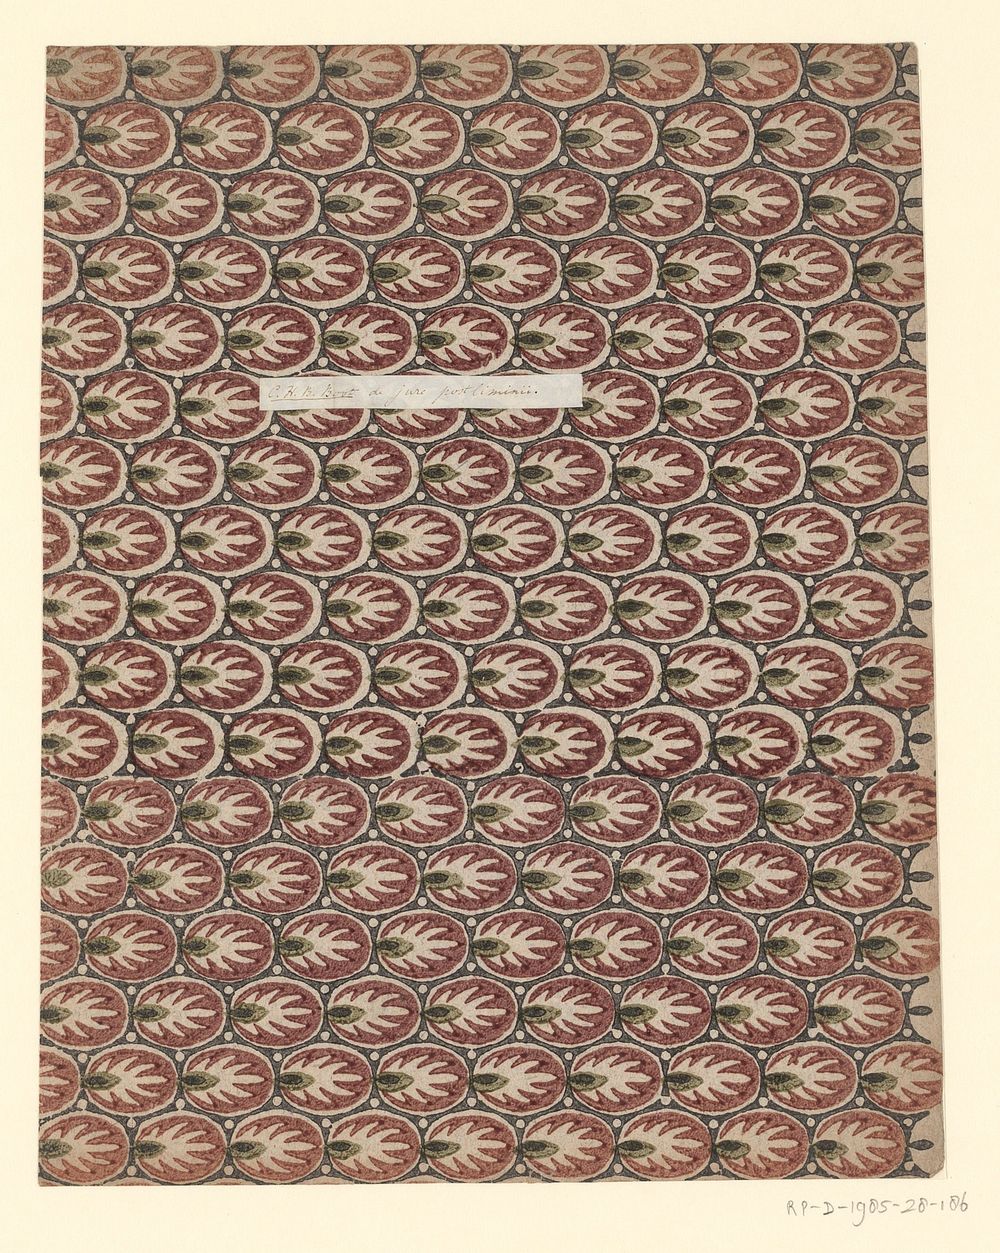 Blad met banenpatroon van uitgespaard bladmotief in ovaal (1750 - 1900) by anonymous